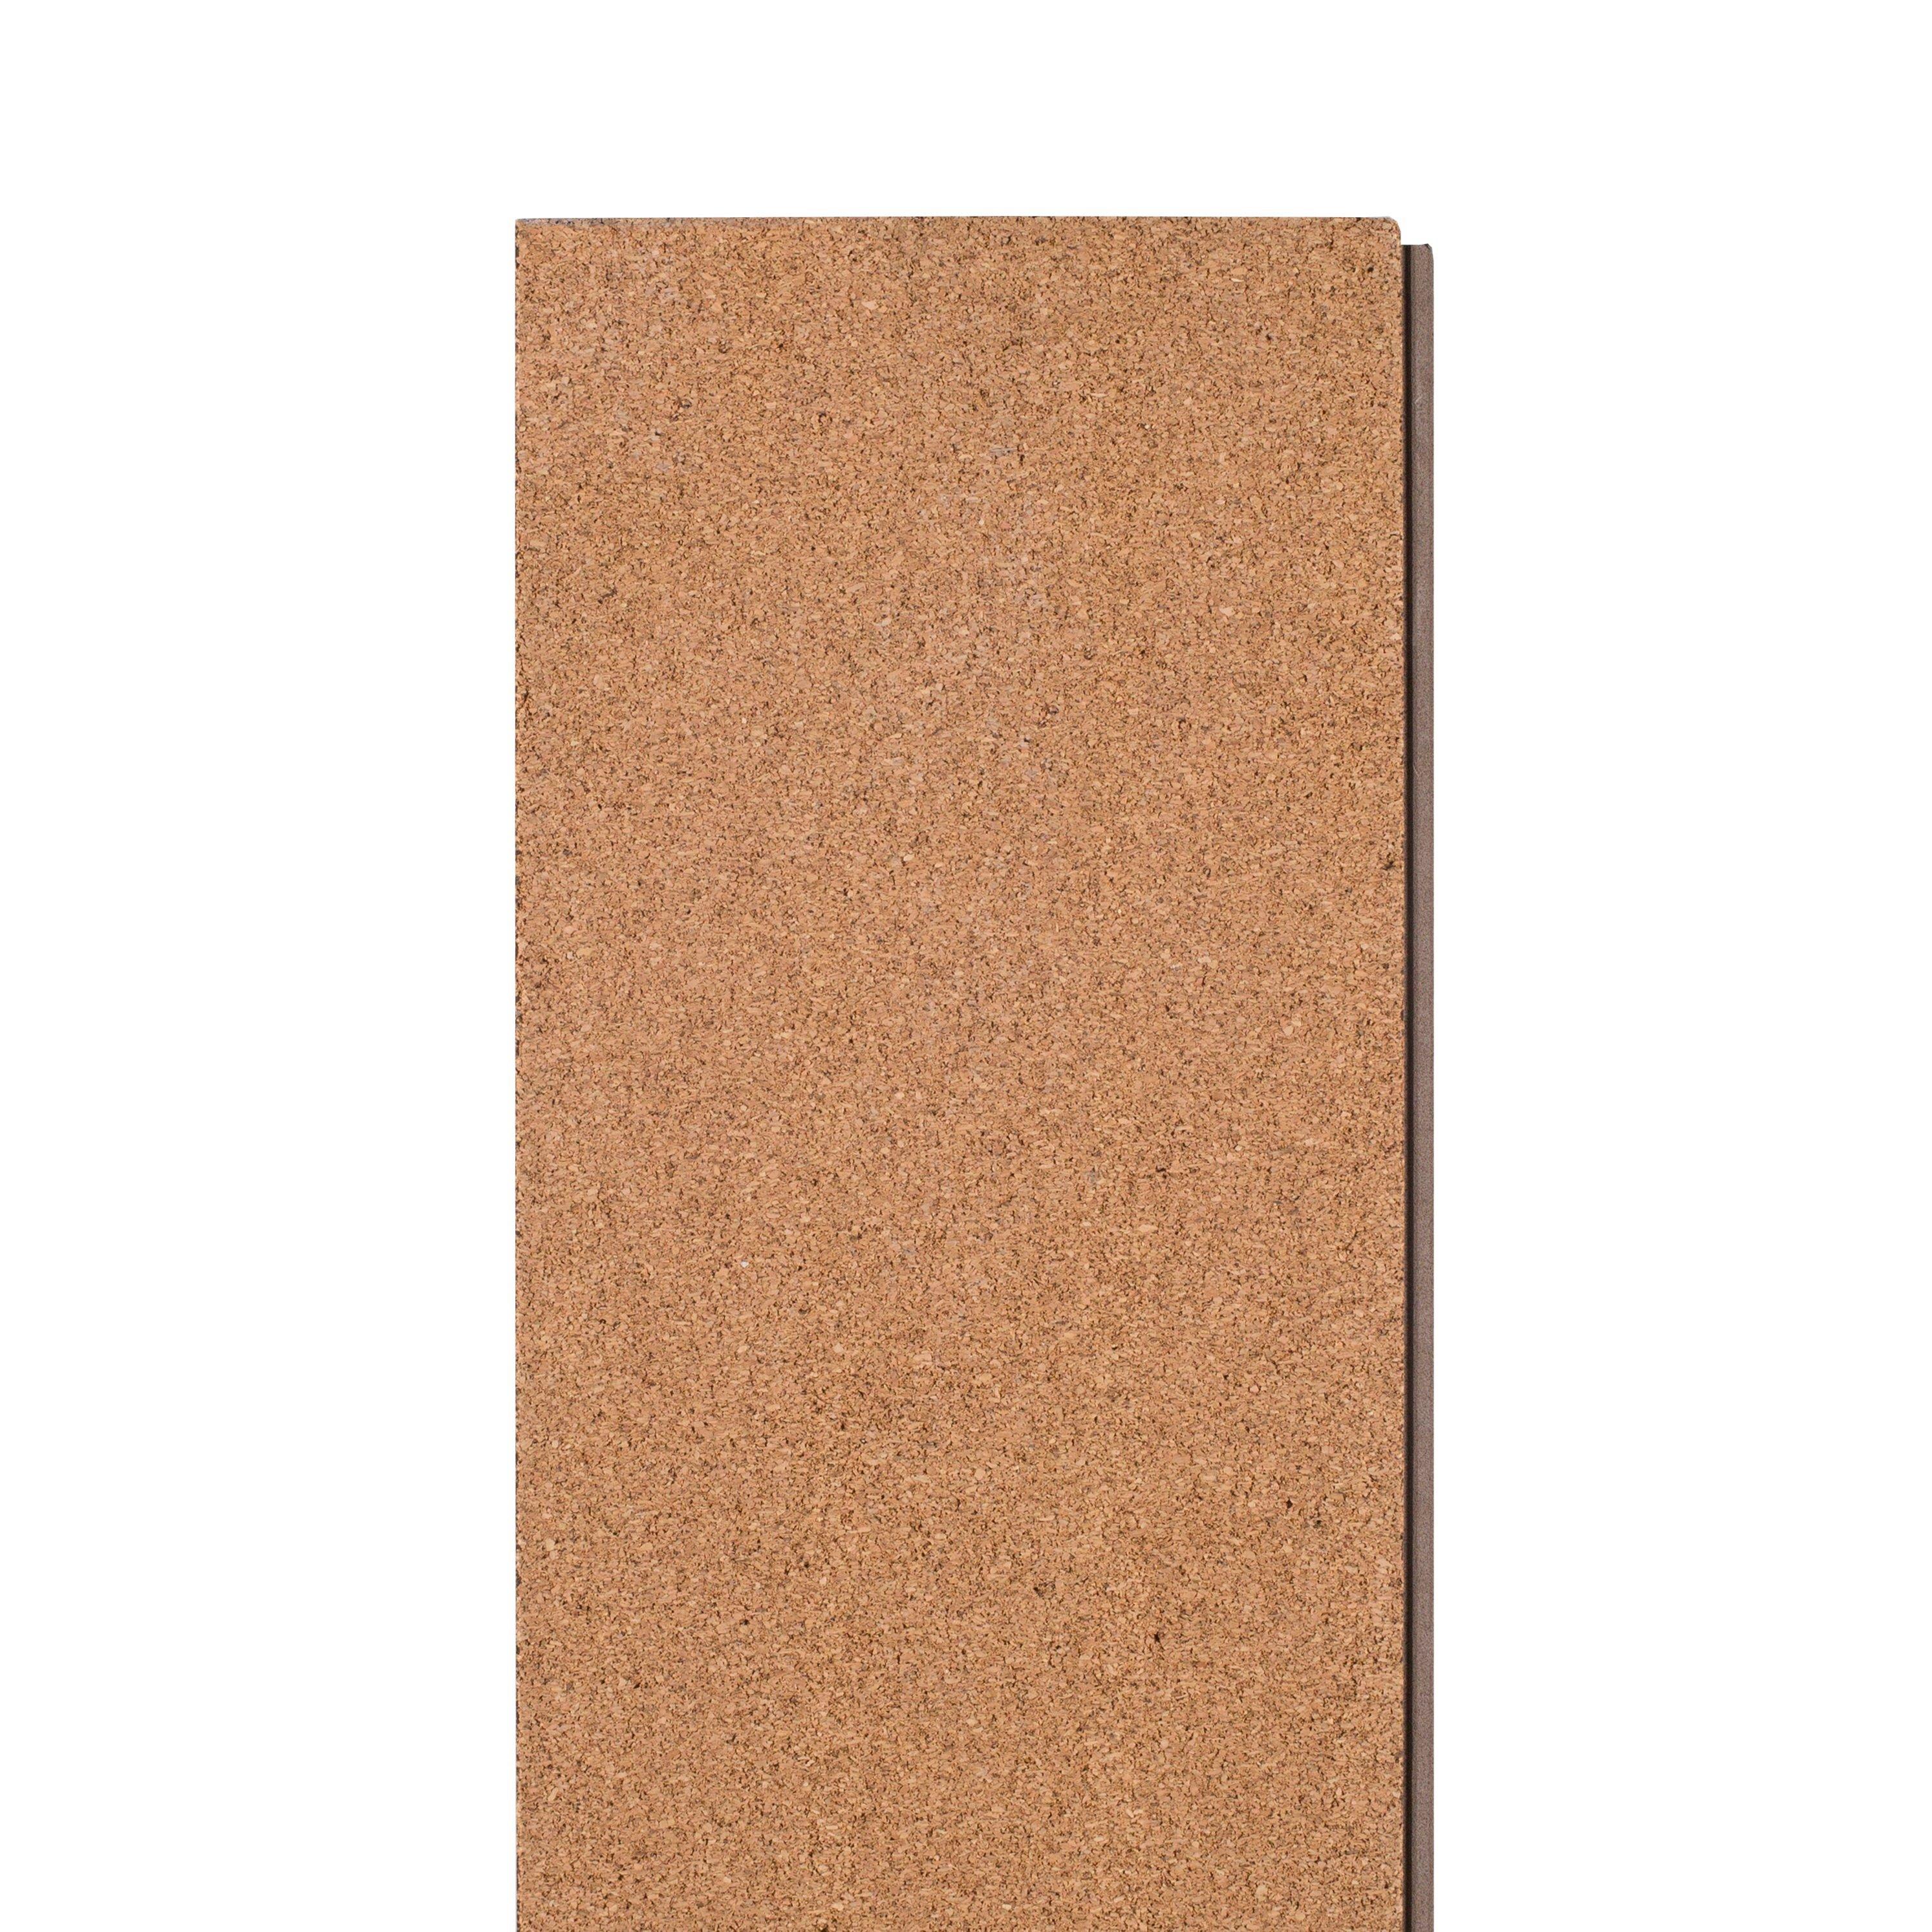 Statford Rigid Core Luxury Vinyl Plank - Cork Back